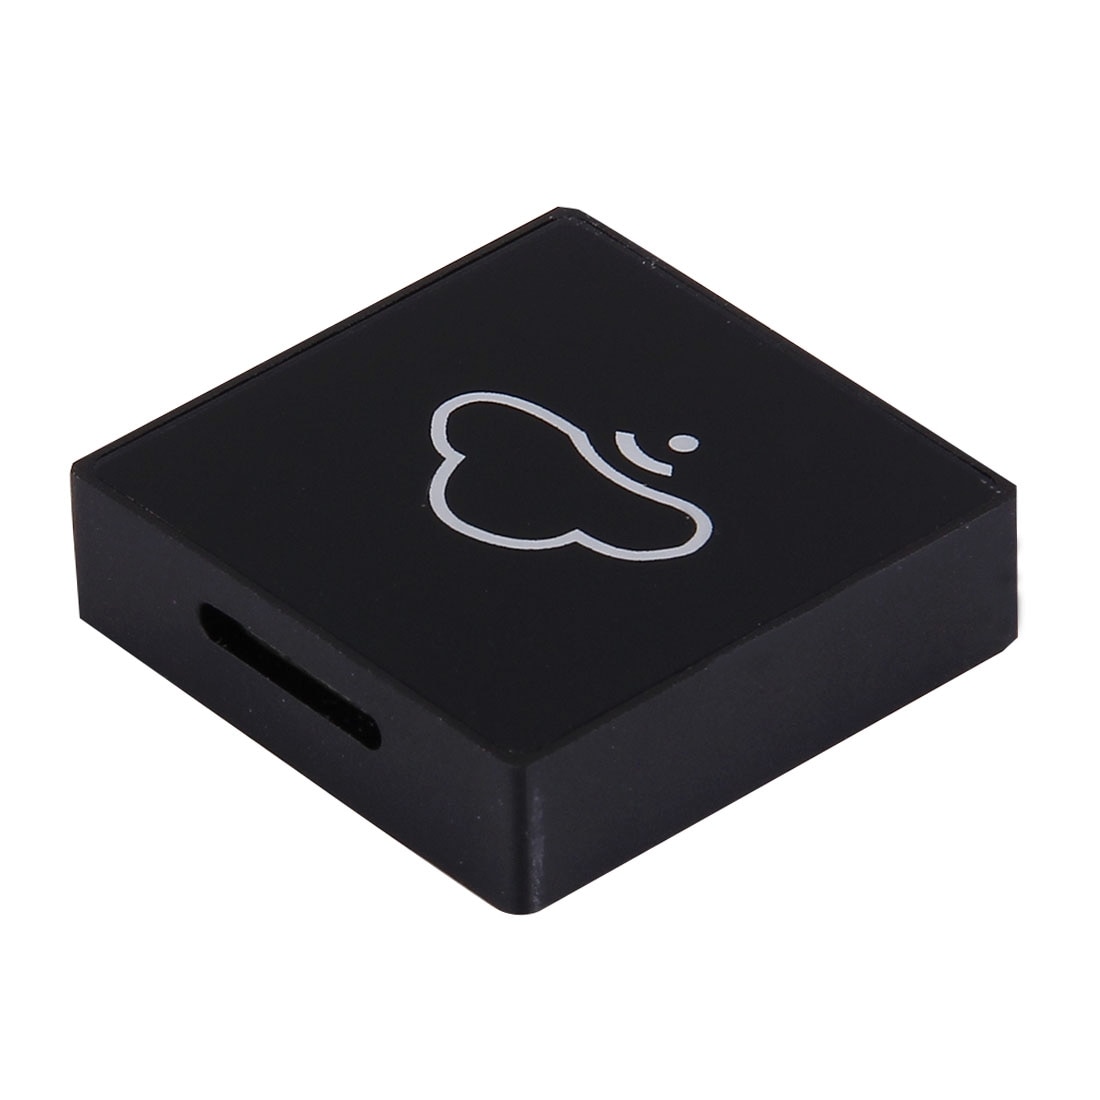 BOX ONE Mini WiFi Trådlös hårddisk för IOS / Android